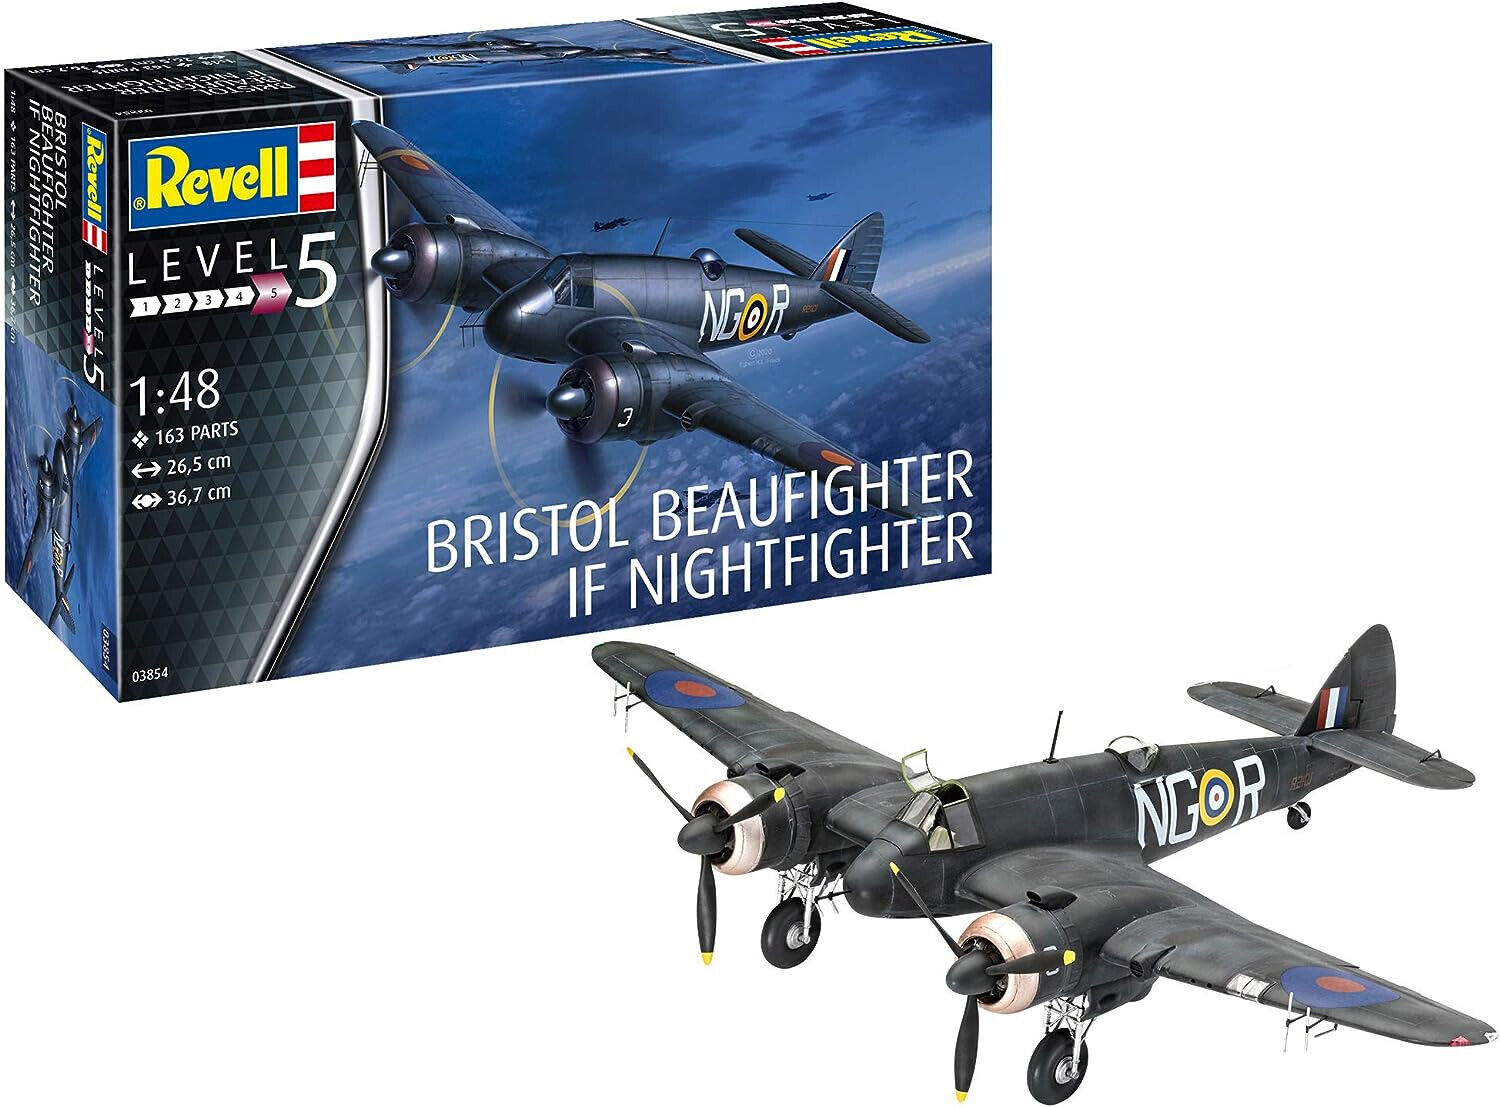 Bristol Beaufighter IF Nightfighter 1:48 Scale Kit